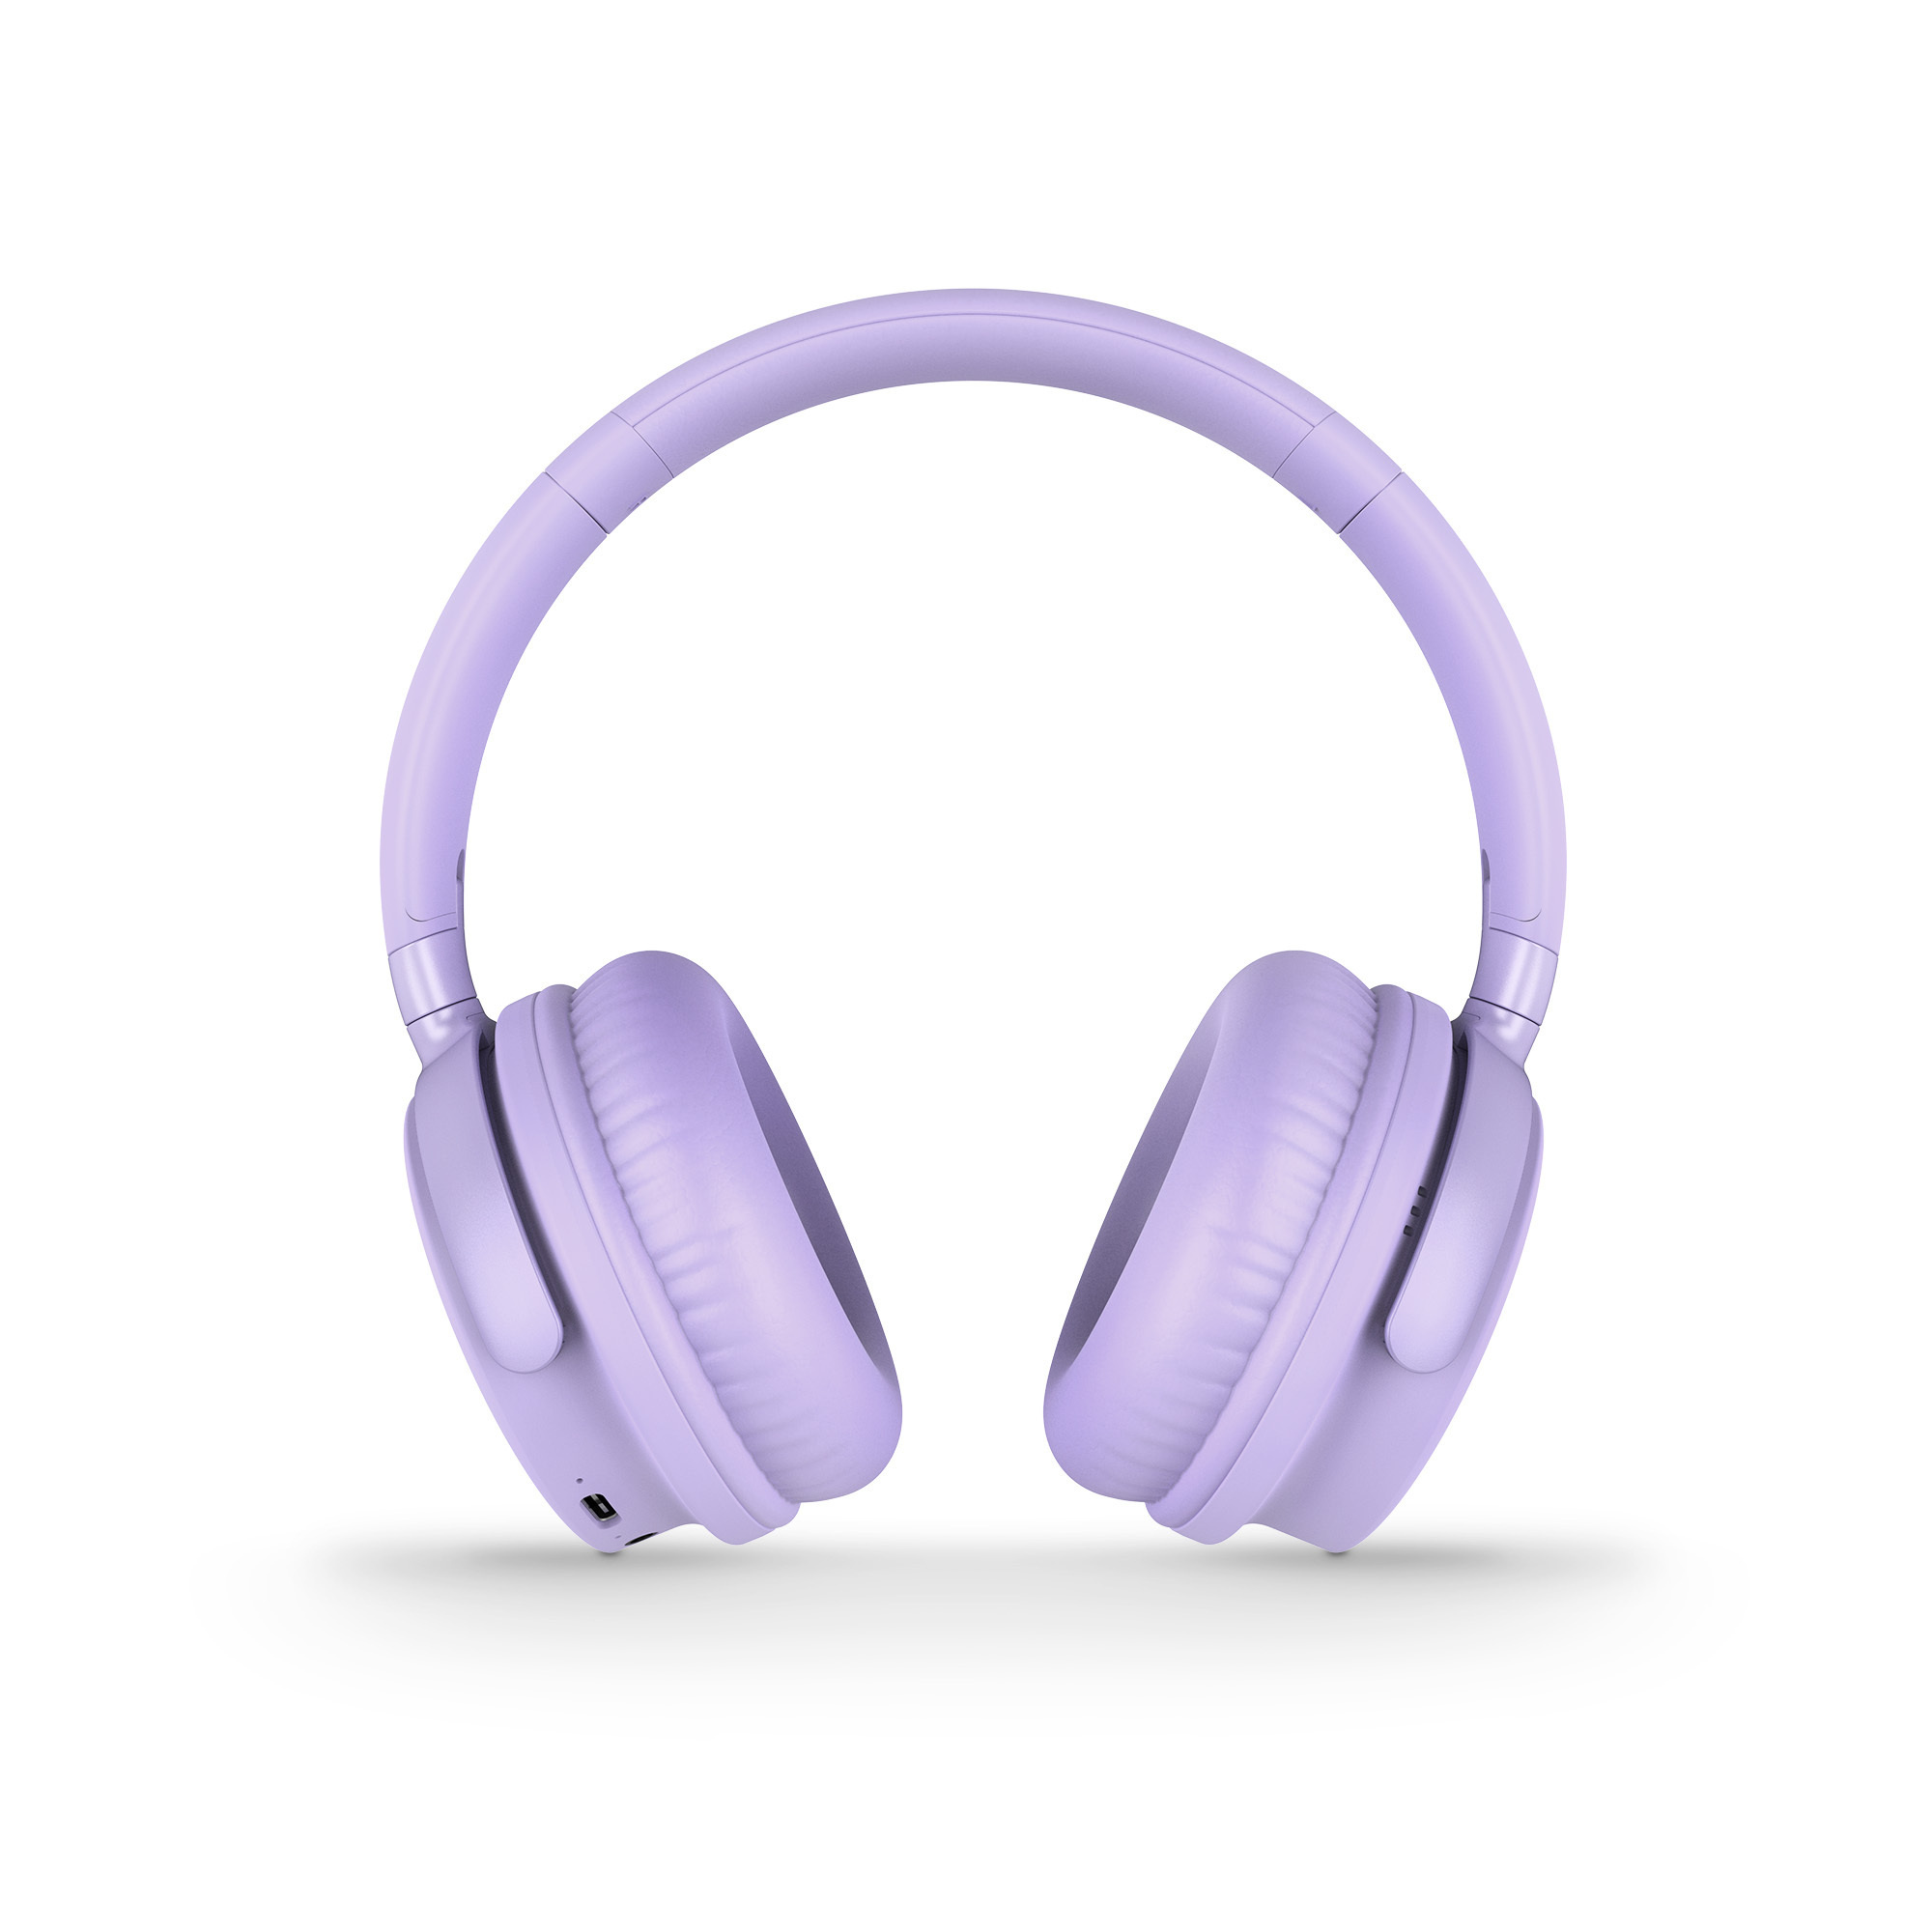 Bluetooth headband headphones with extra comfortable ear pads